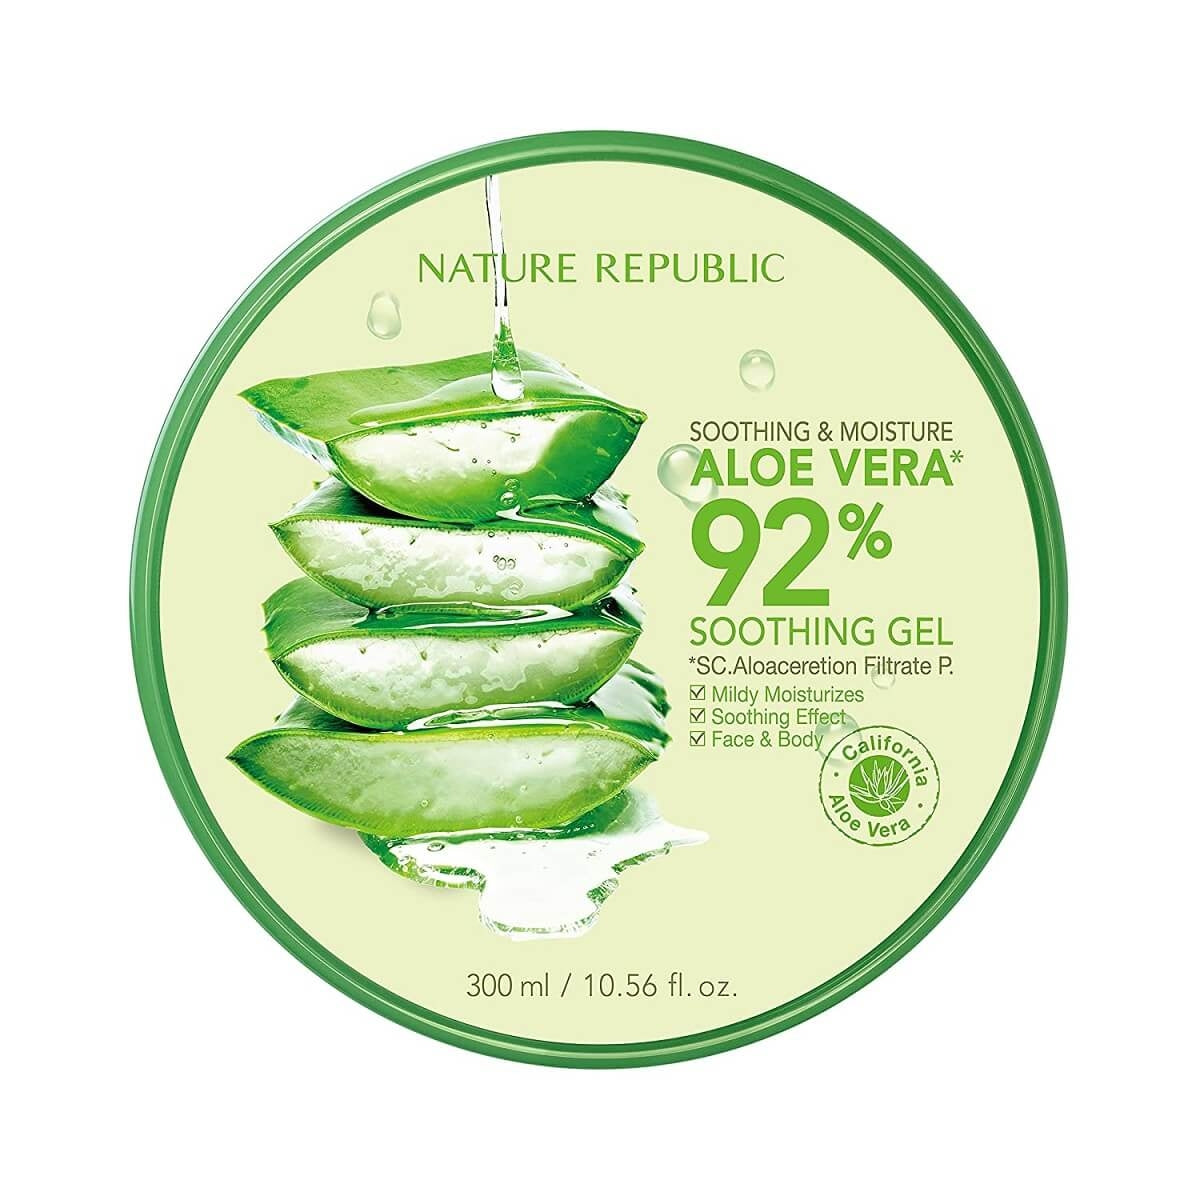 Nature Republic (Official) Soothing & Moisture Aloe Vera Gel 92% Soothing Gel 300ml